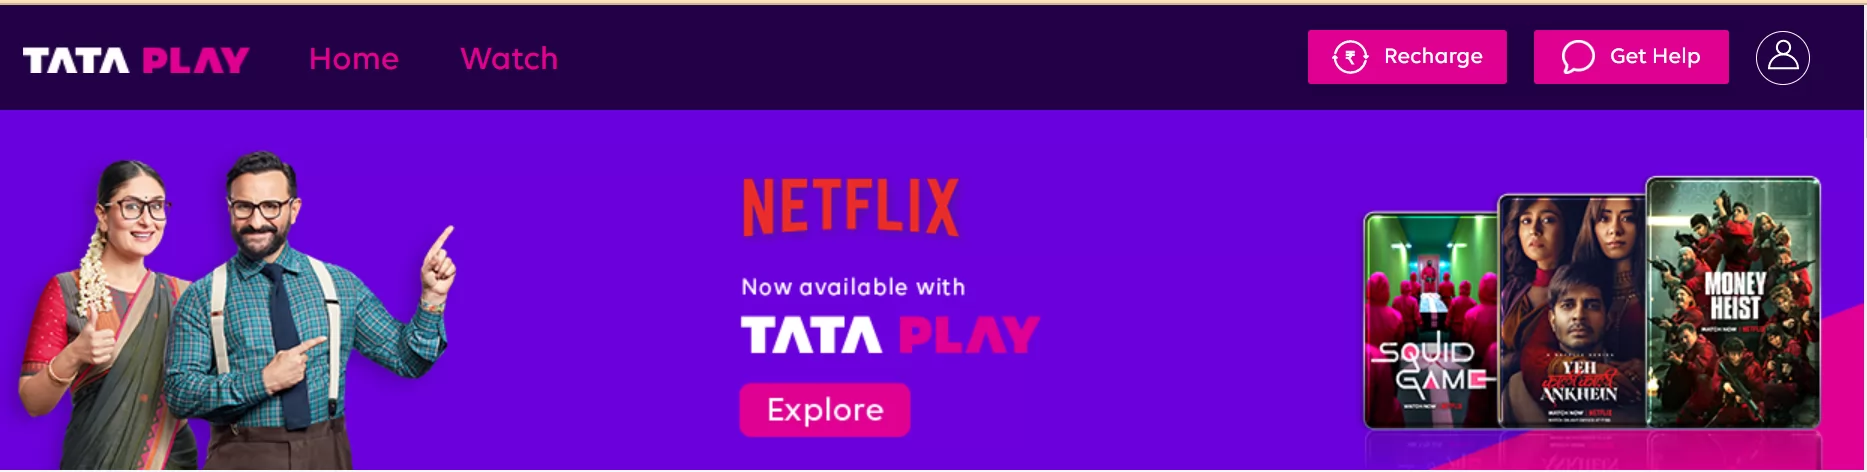 Tata Play Netflix Combos